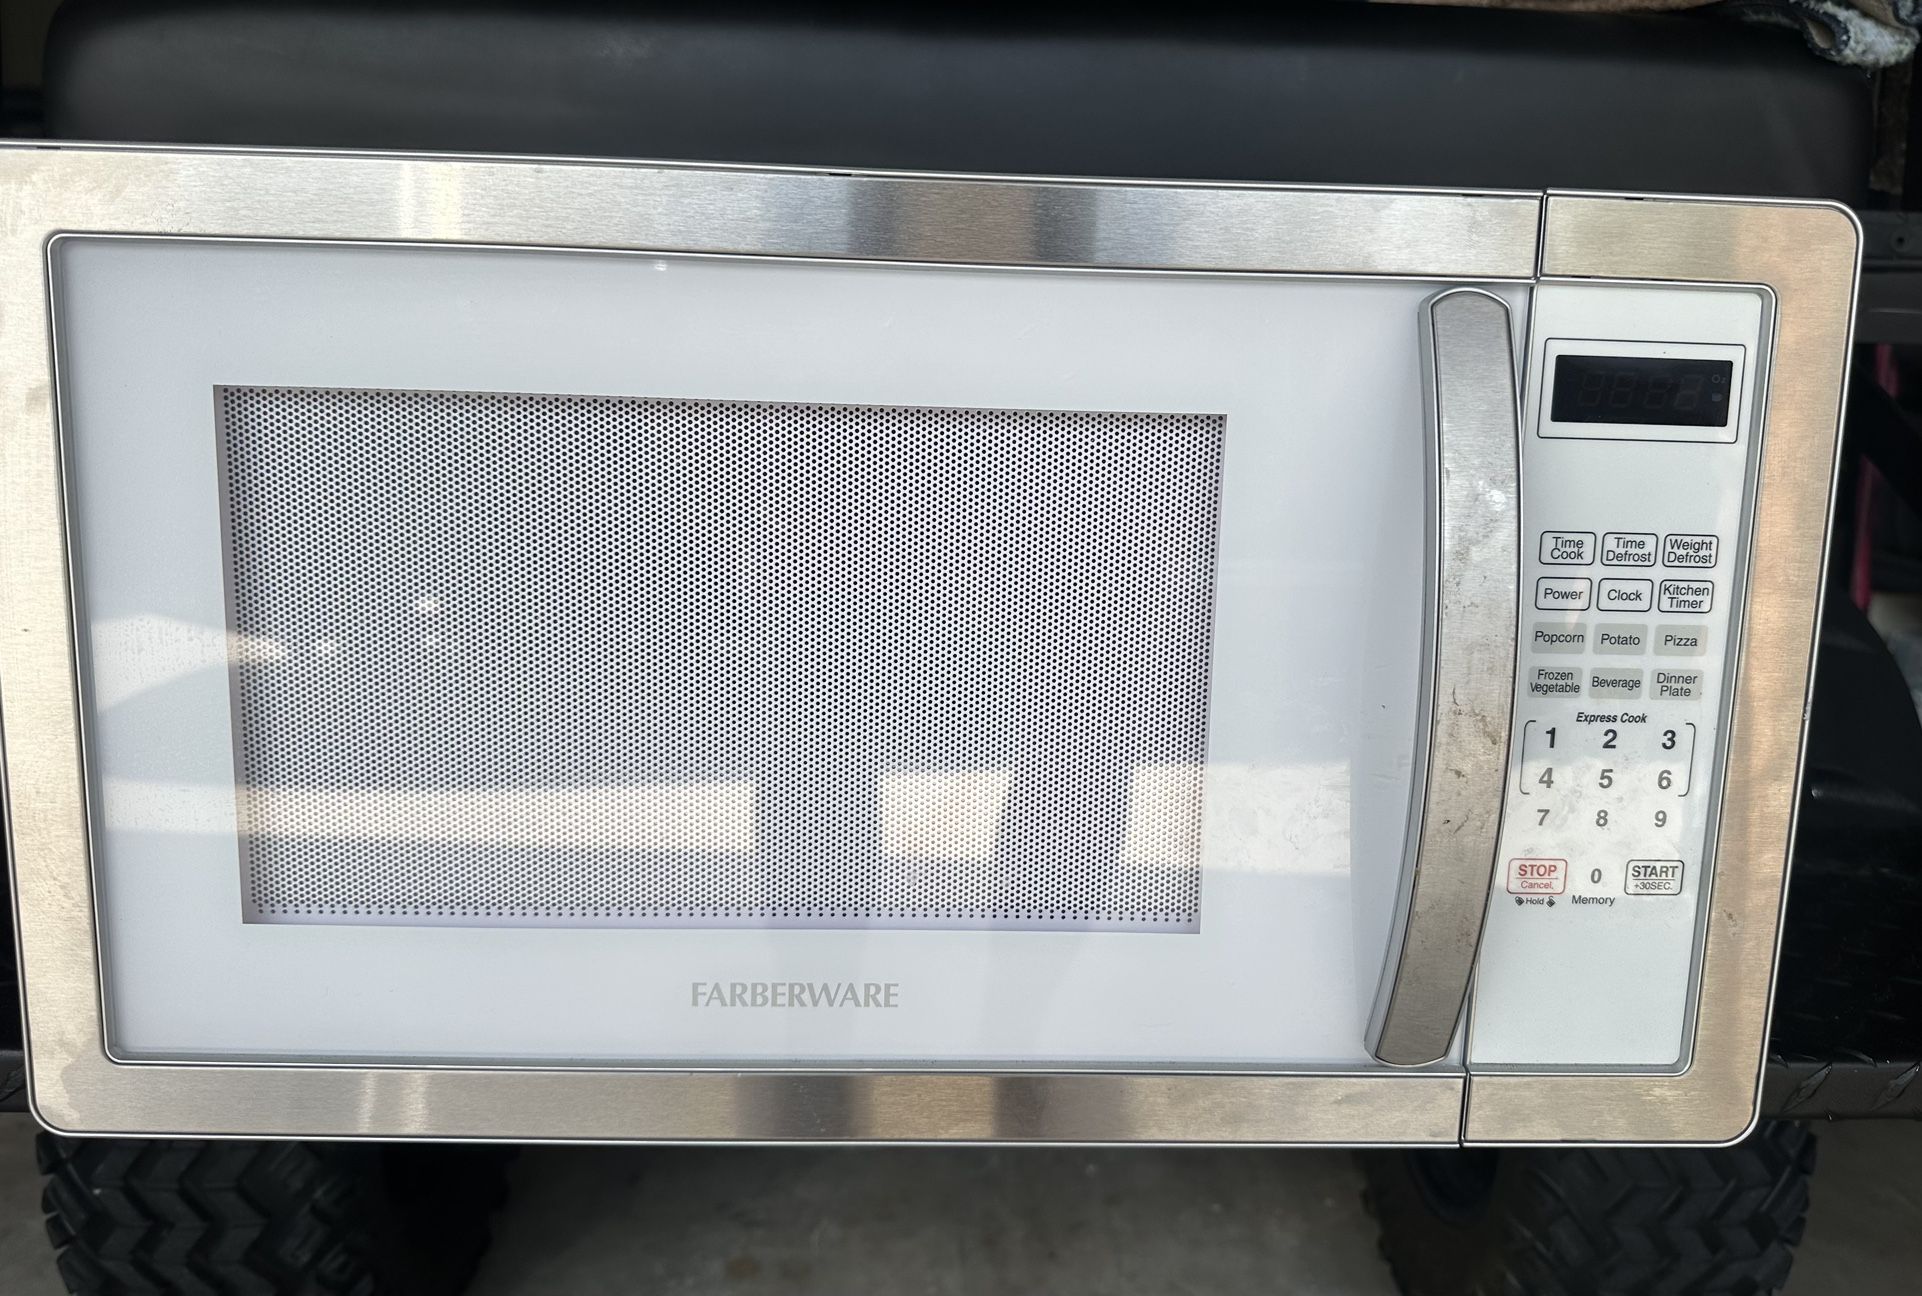 Microwave, farberware 2022, Silver/white